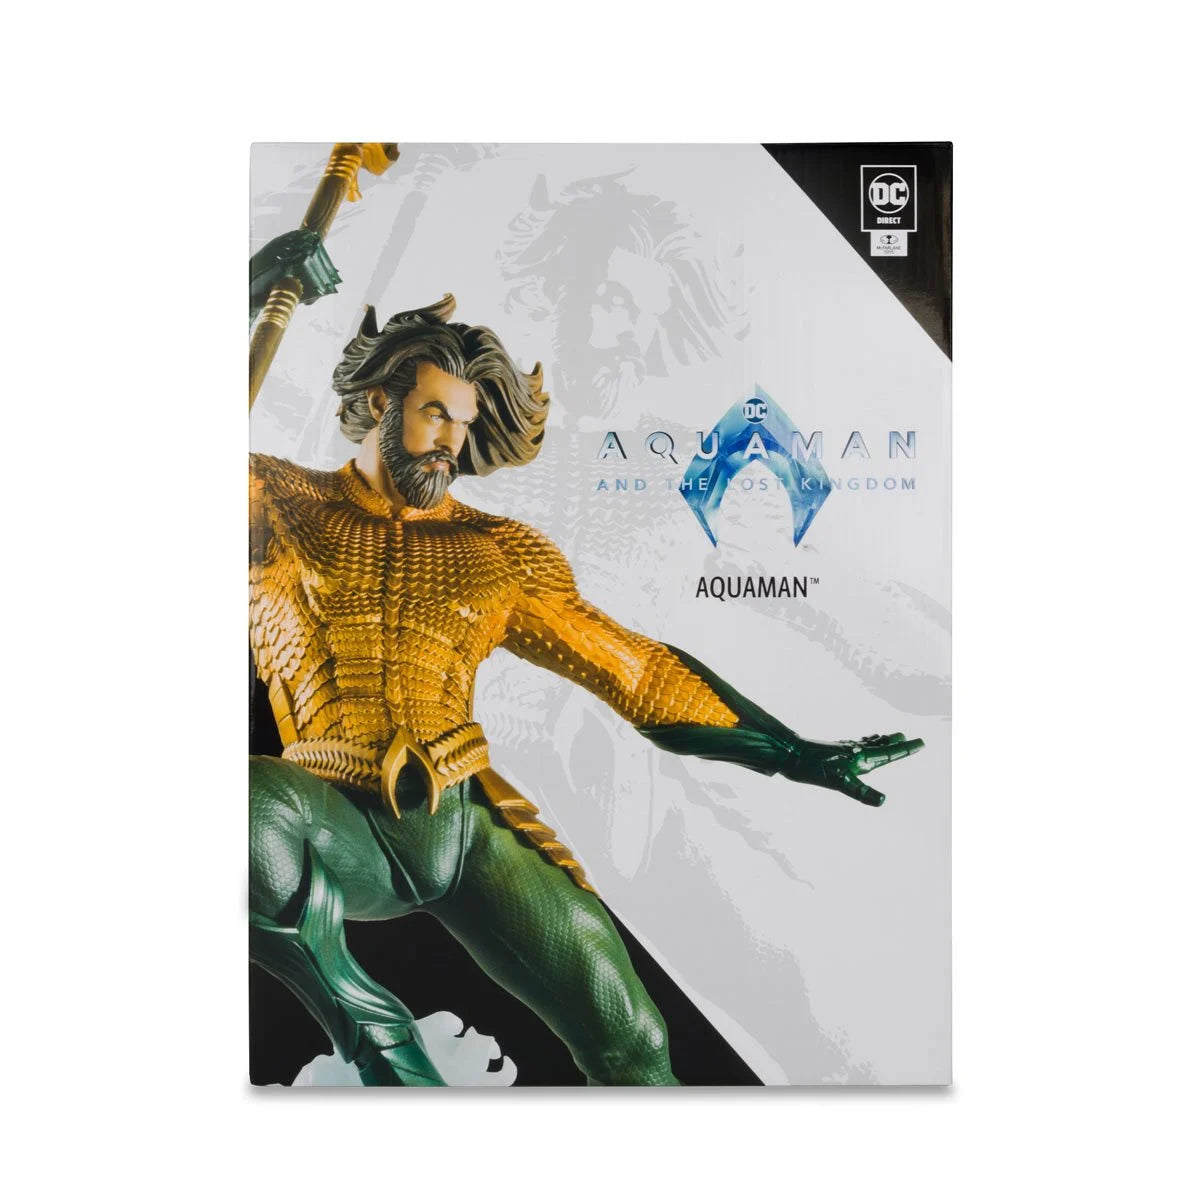 Aquaman and the Lost Kingdom DC Multiverse Action Figure Aquaman